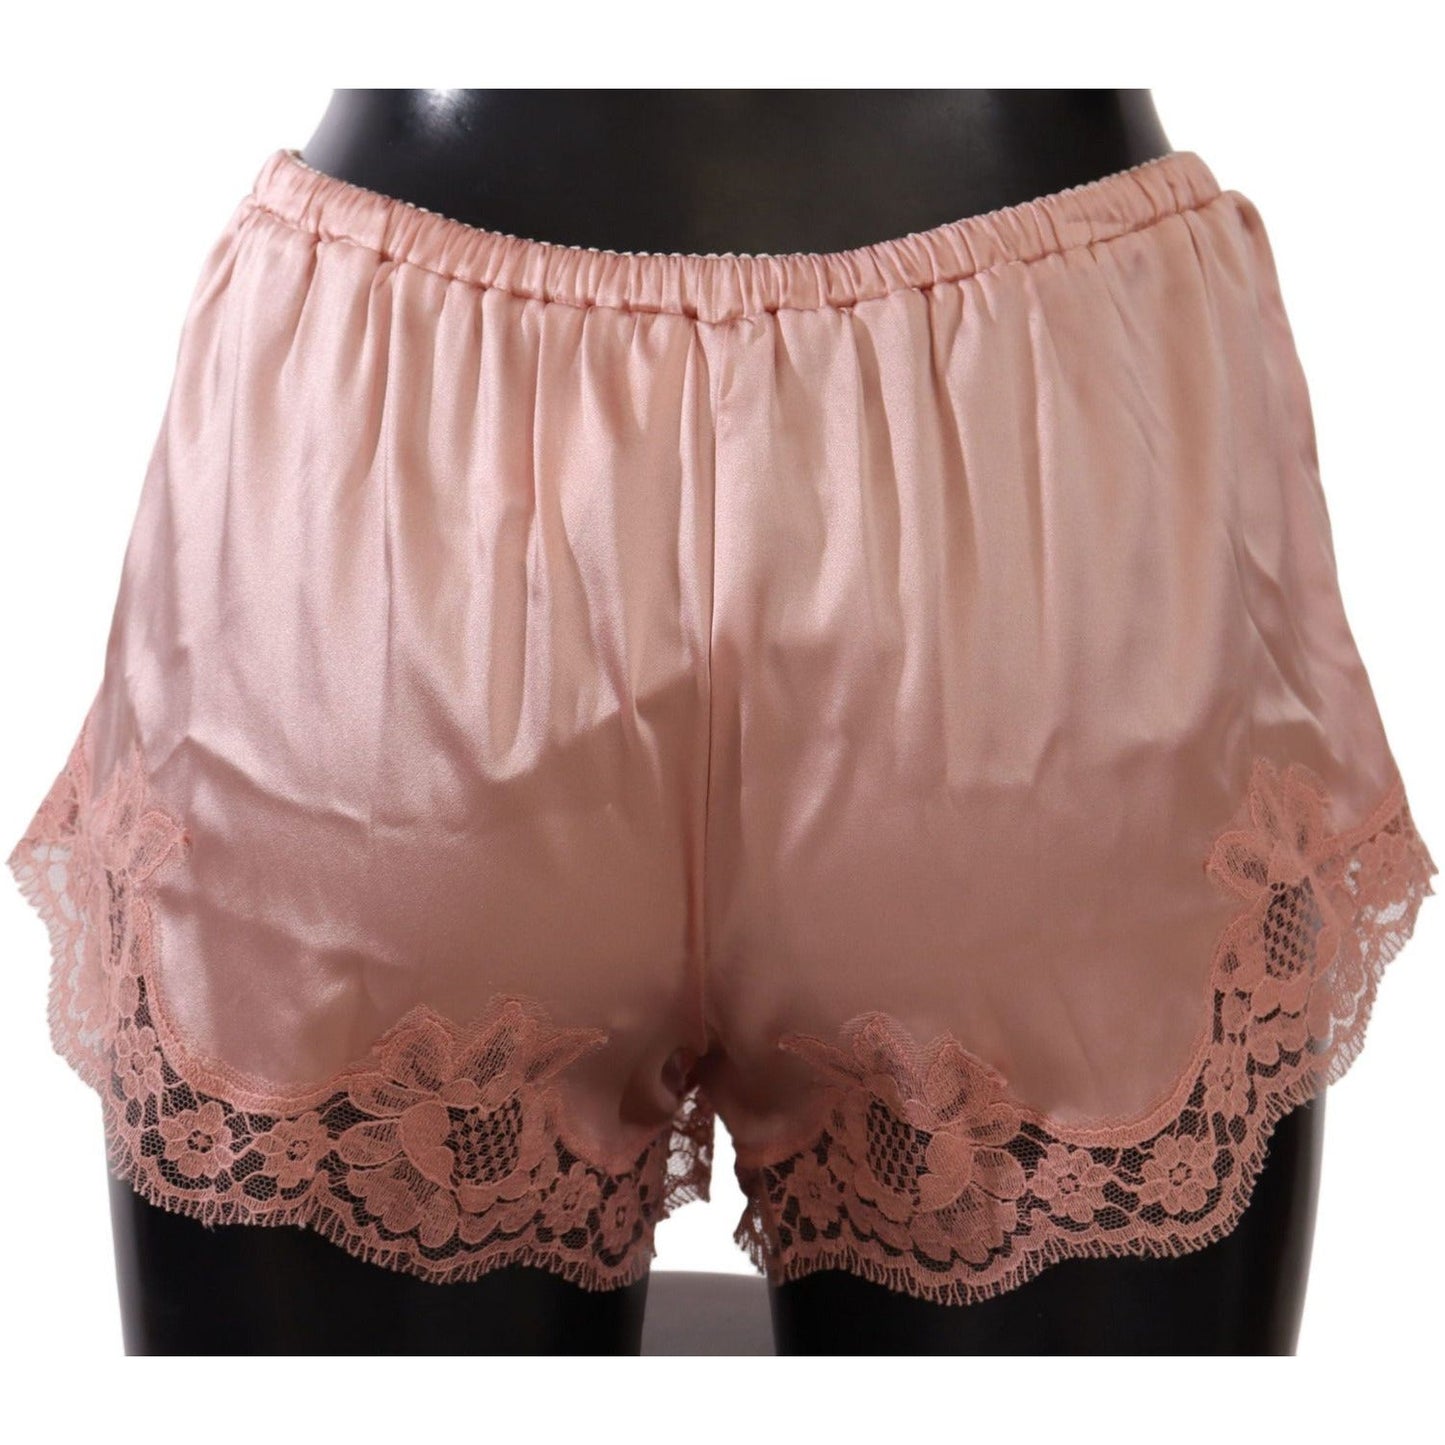 Dolce & Gabbana Elegant Powder Pink Silk Lace Lingerie Shorts WOMAN UNDERWEAR pink-floral-lace-lingerie-underwear